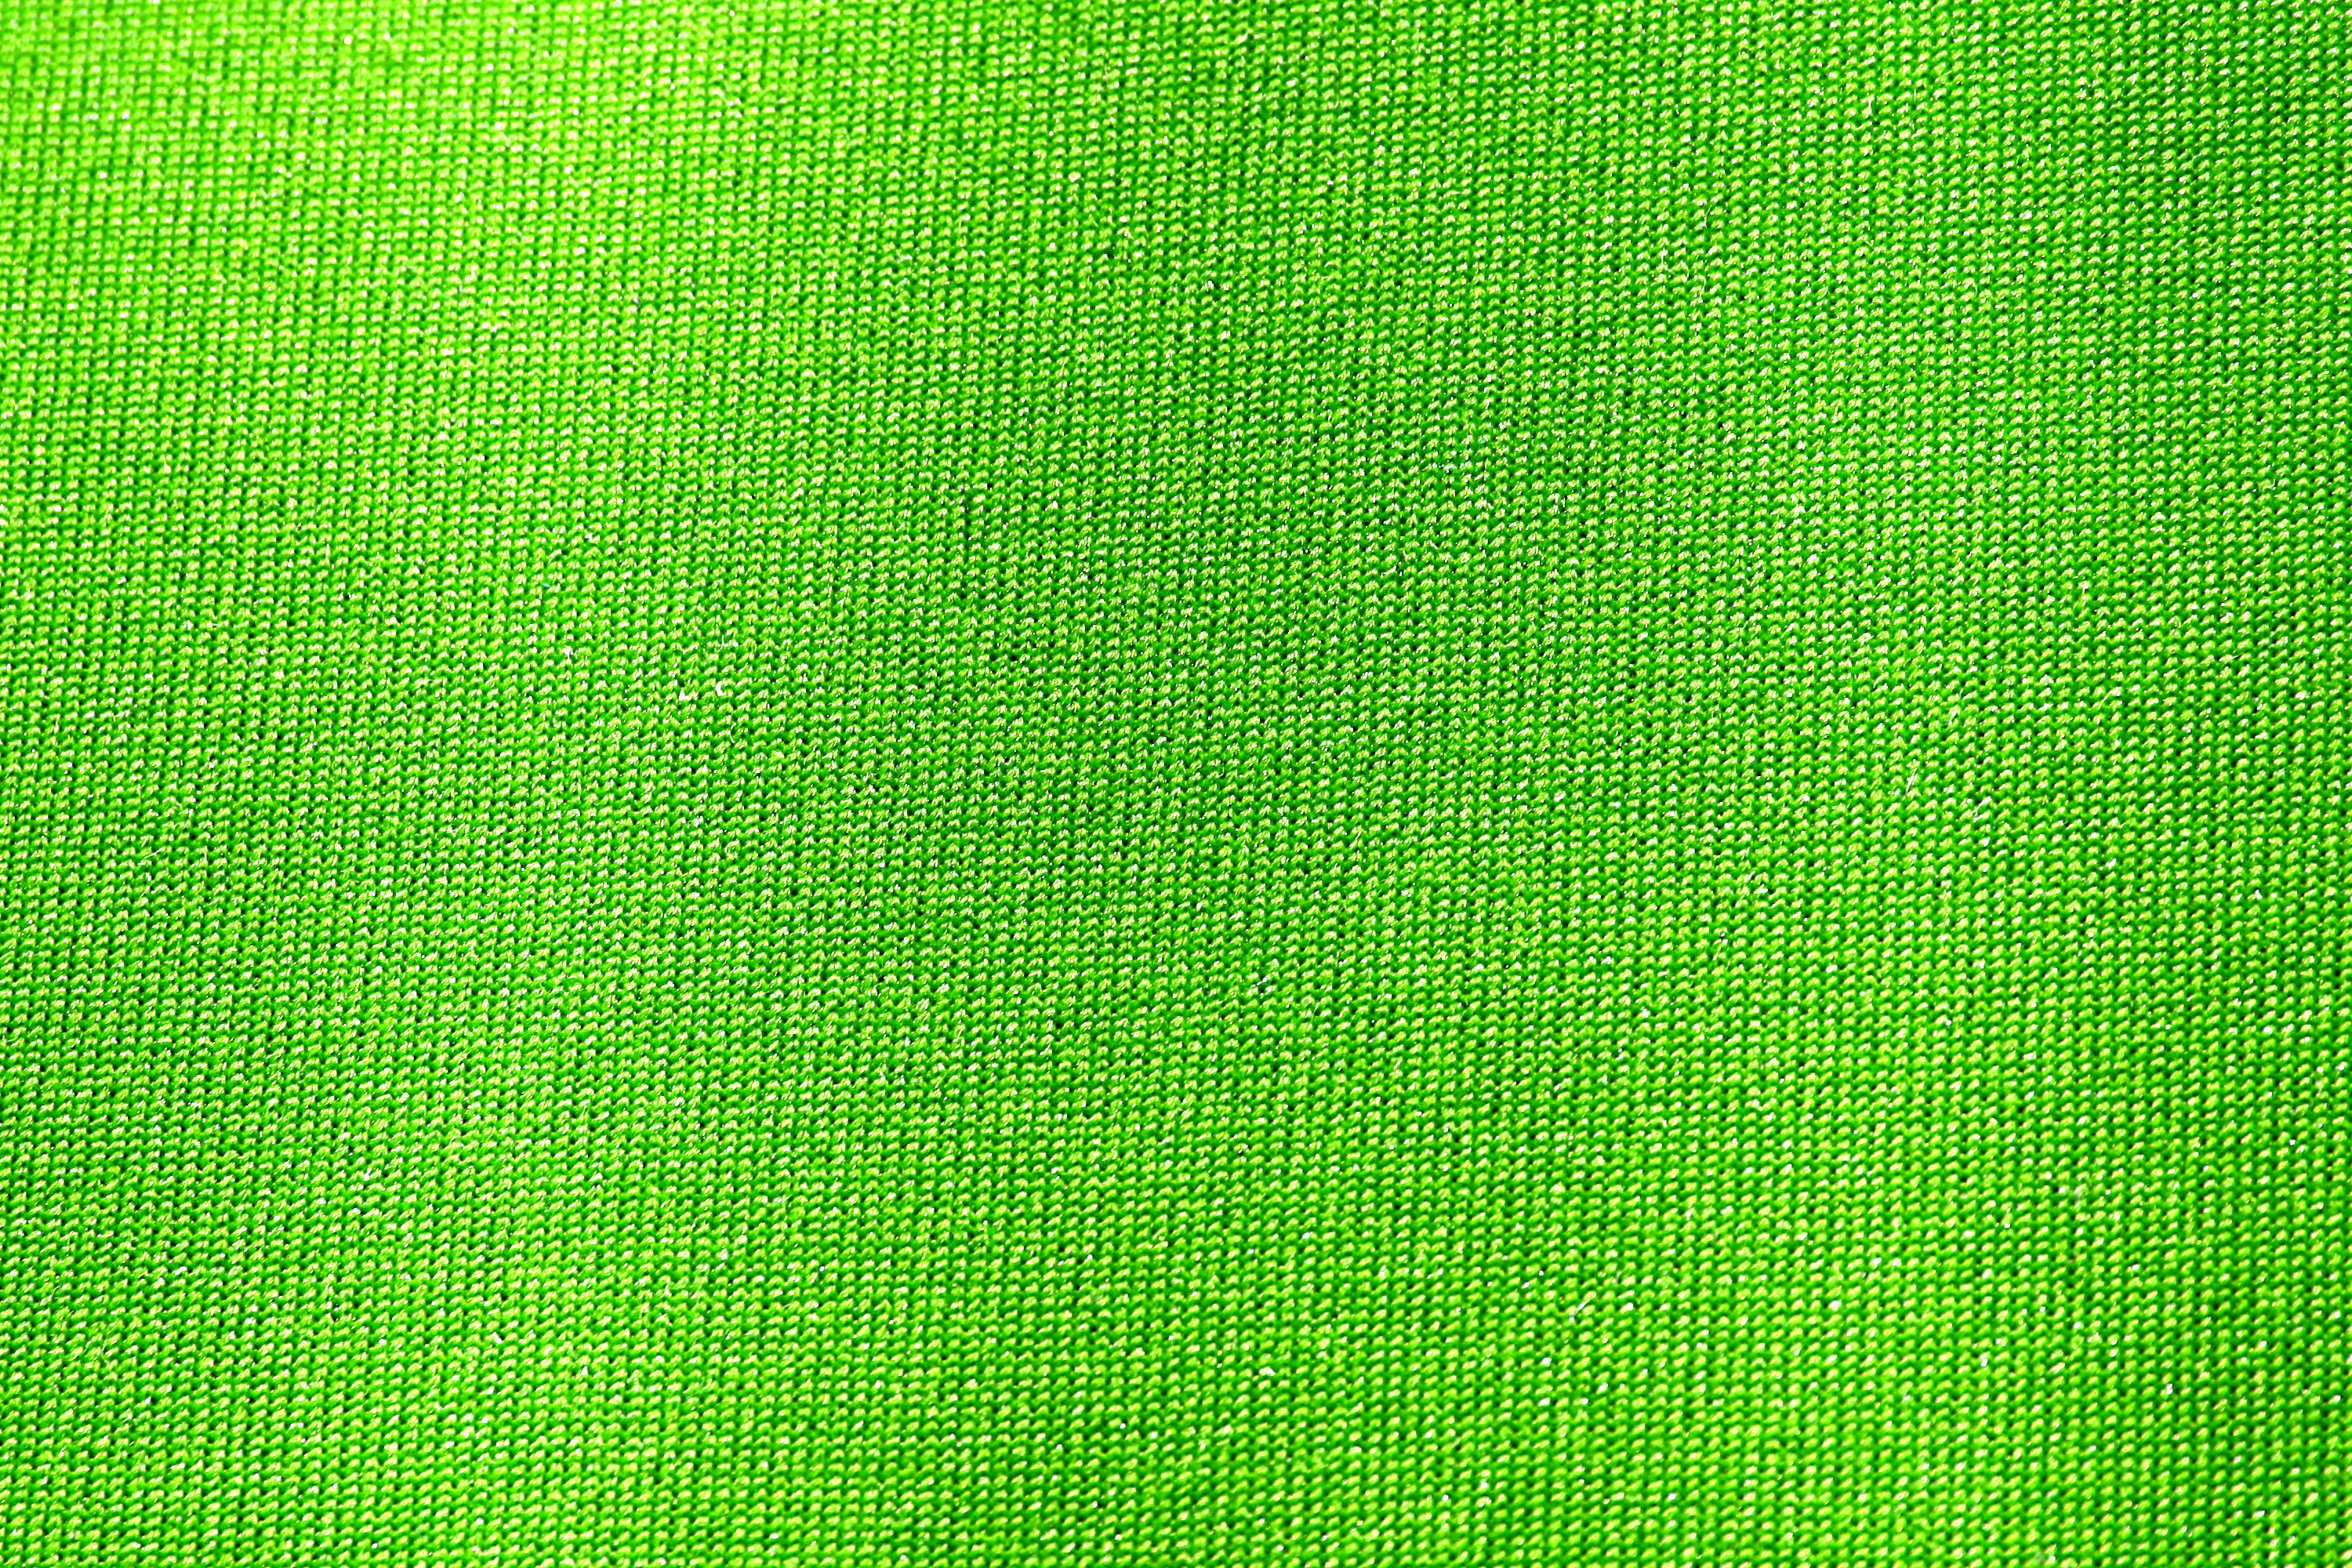 Neon Green Nylon Fabric Close Up Texture High Resolution Photo